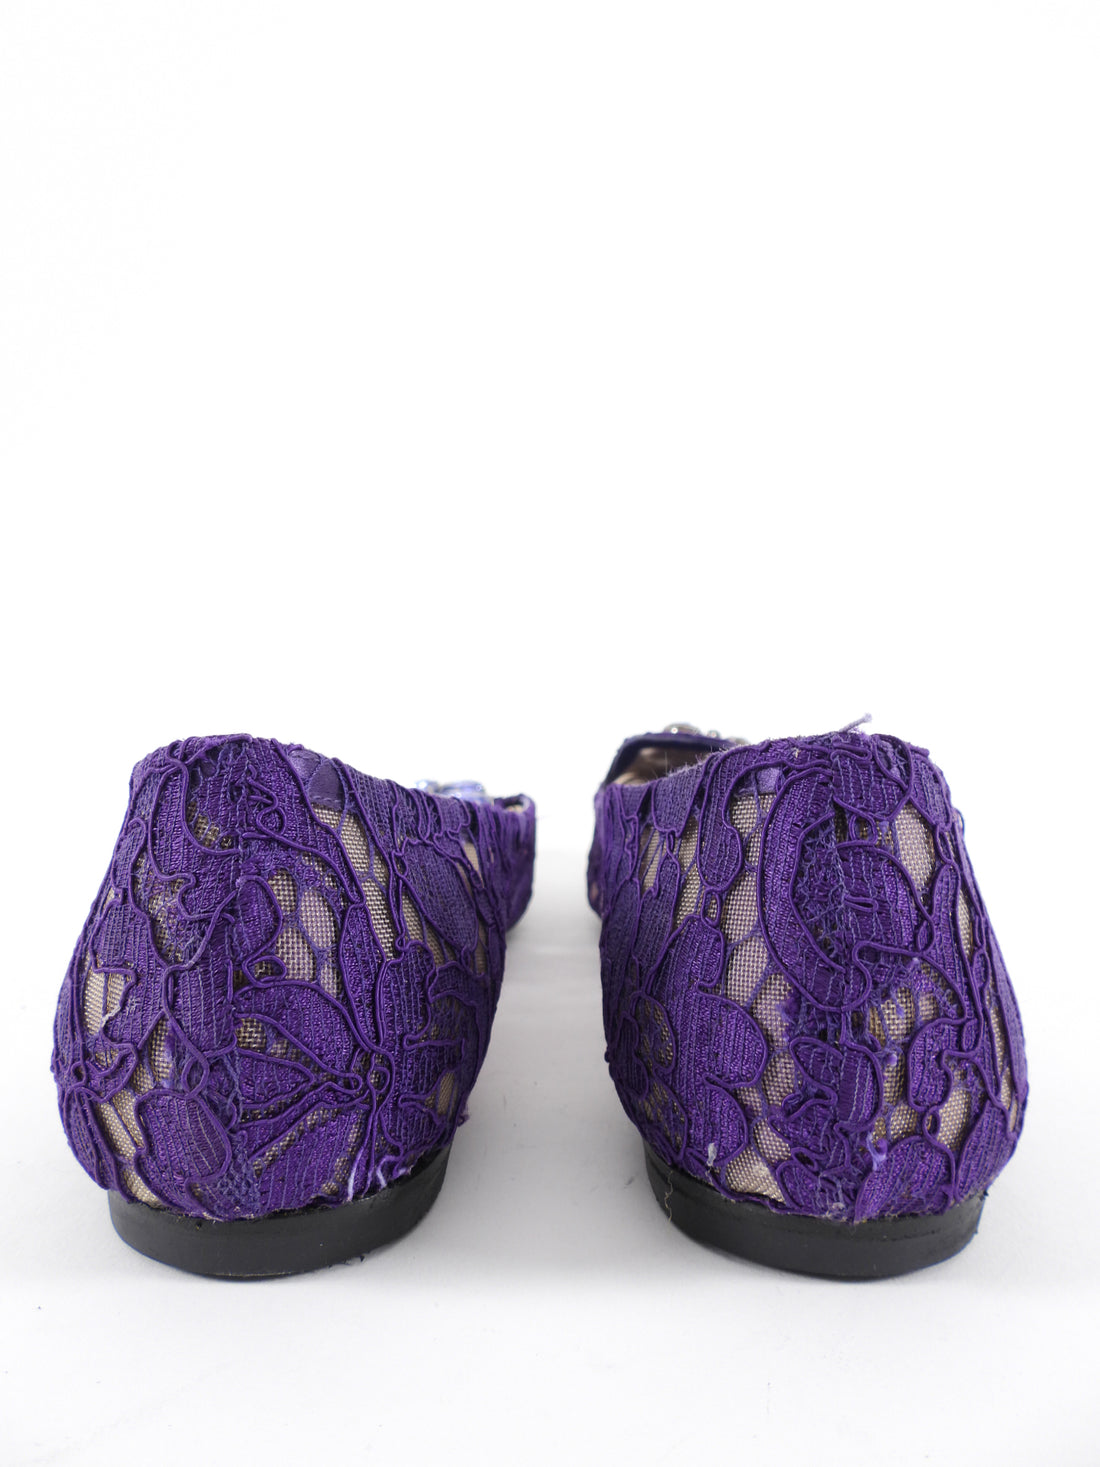 Dolce & Gabbana Purple Lace Crystal Flat Shoes - 40